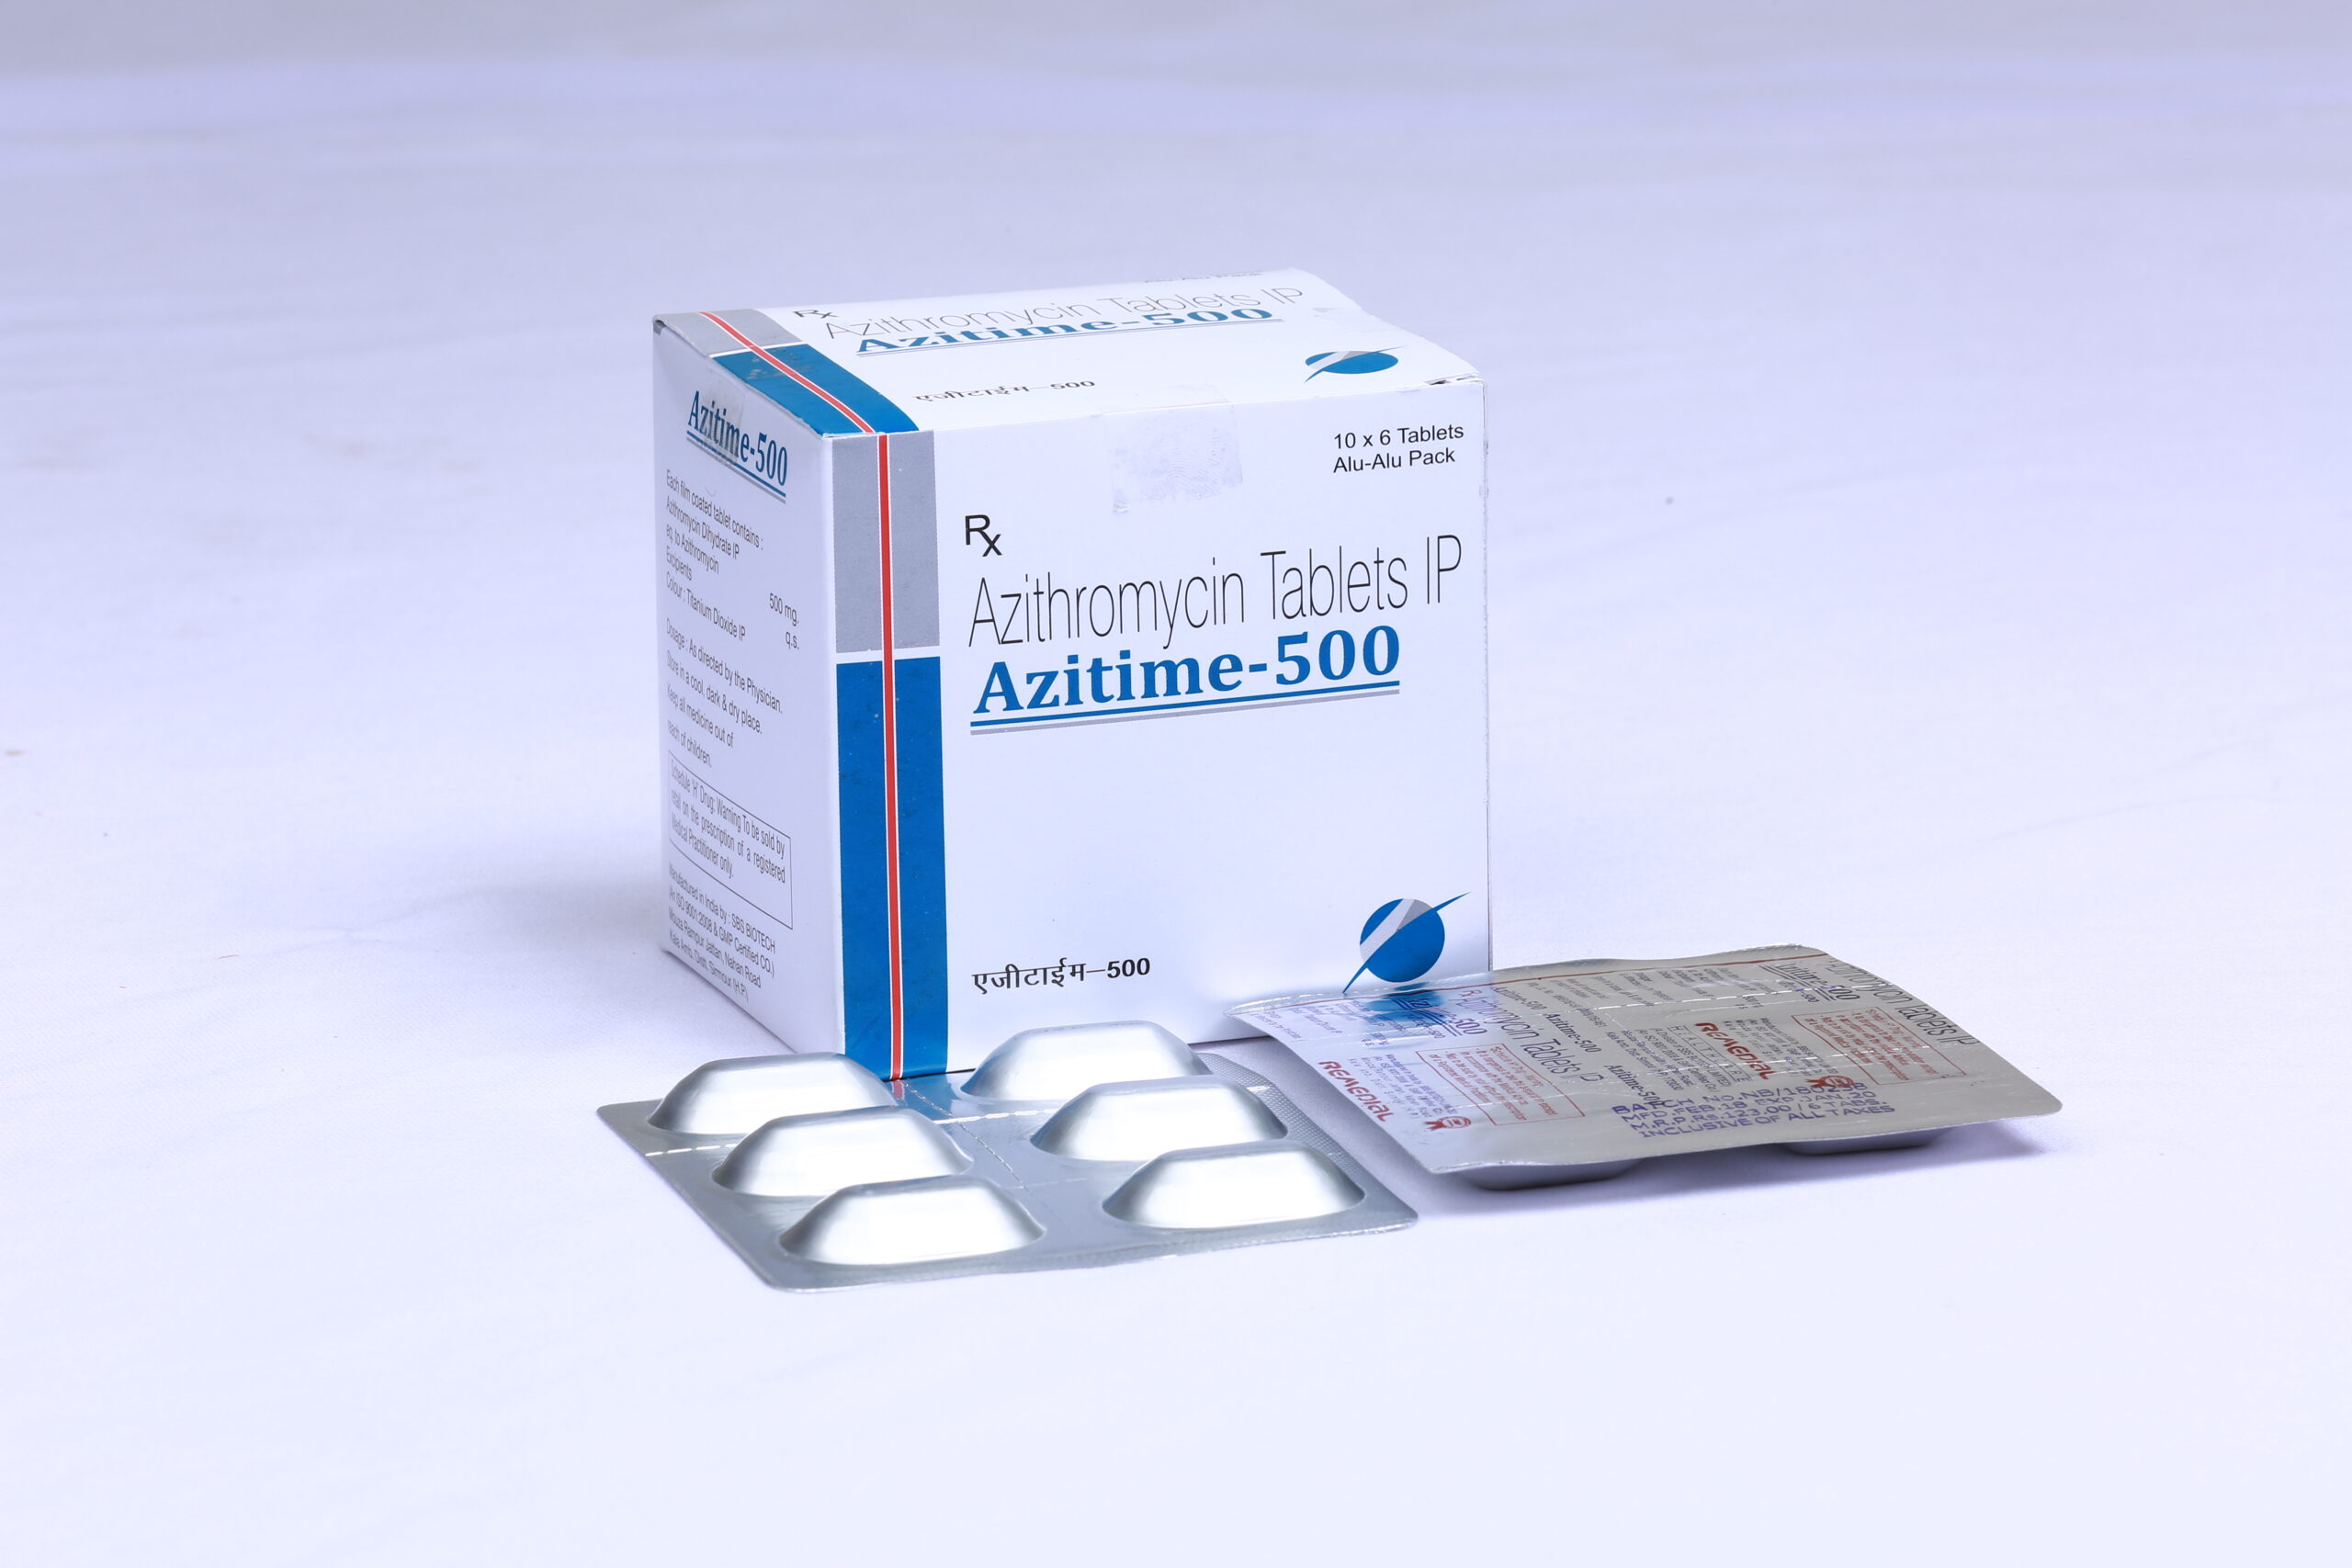 AZITIME-500 (Azithromycin Dihydrate 500mg)